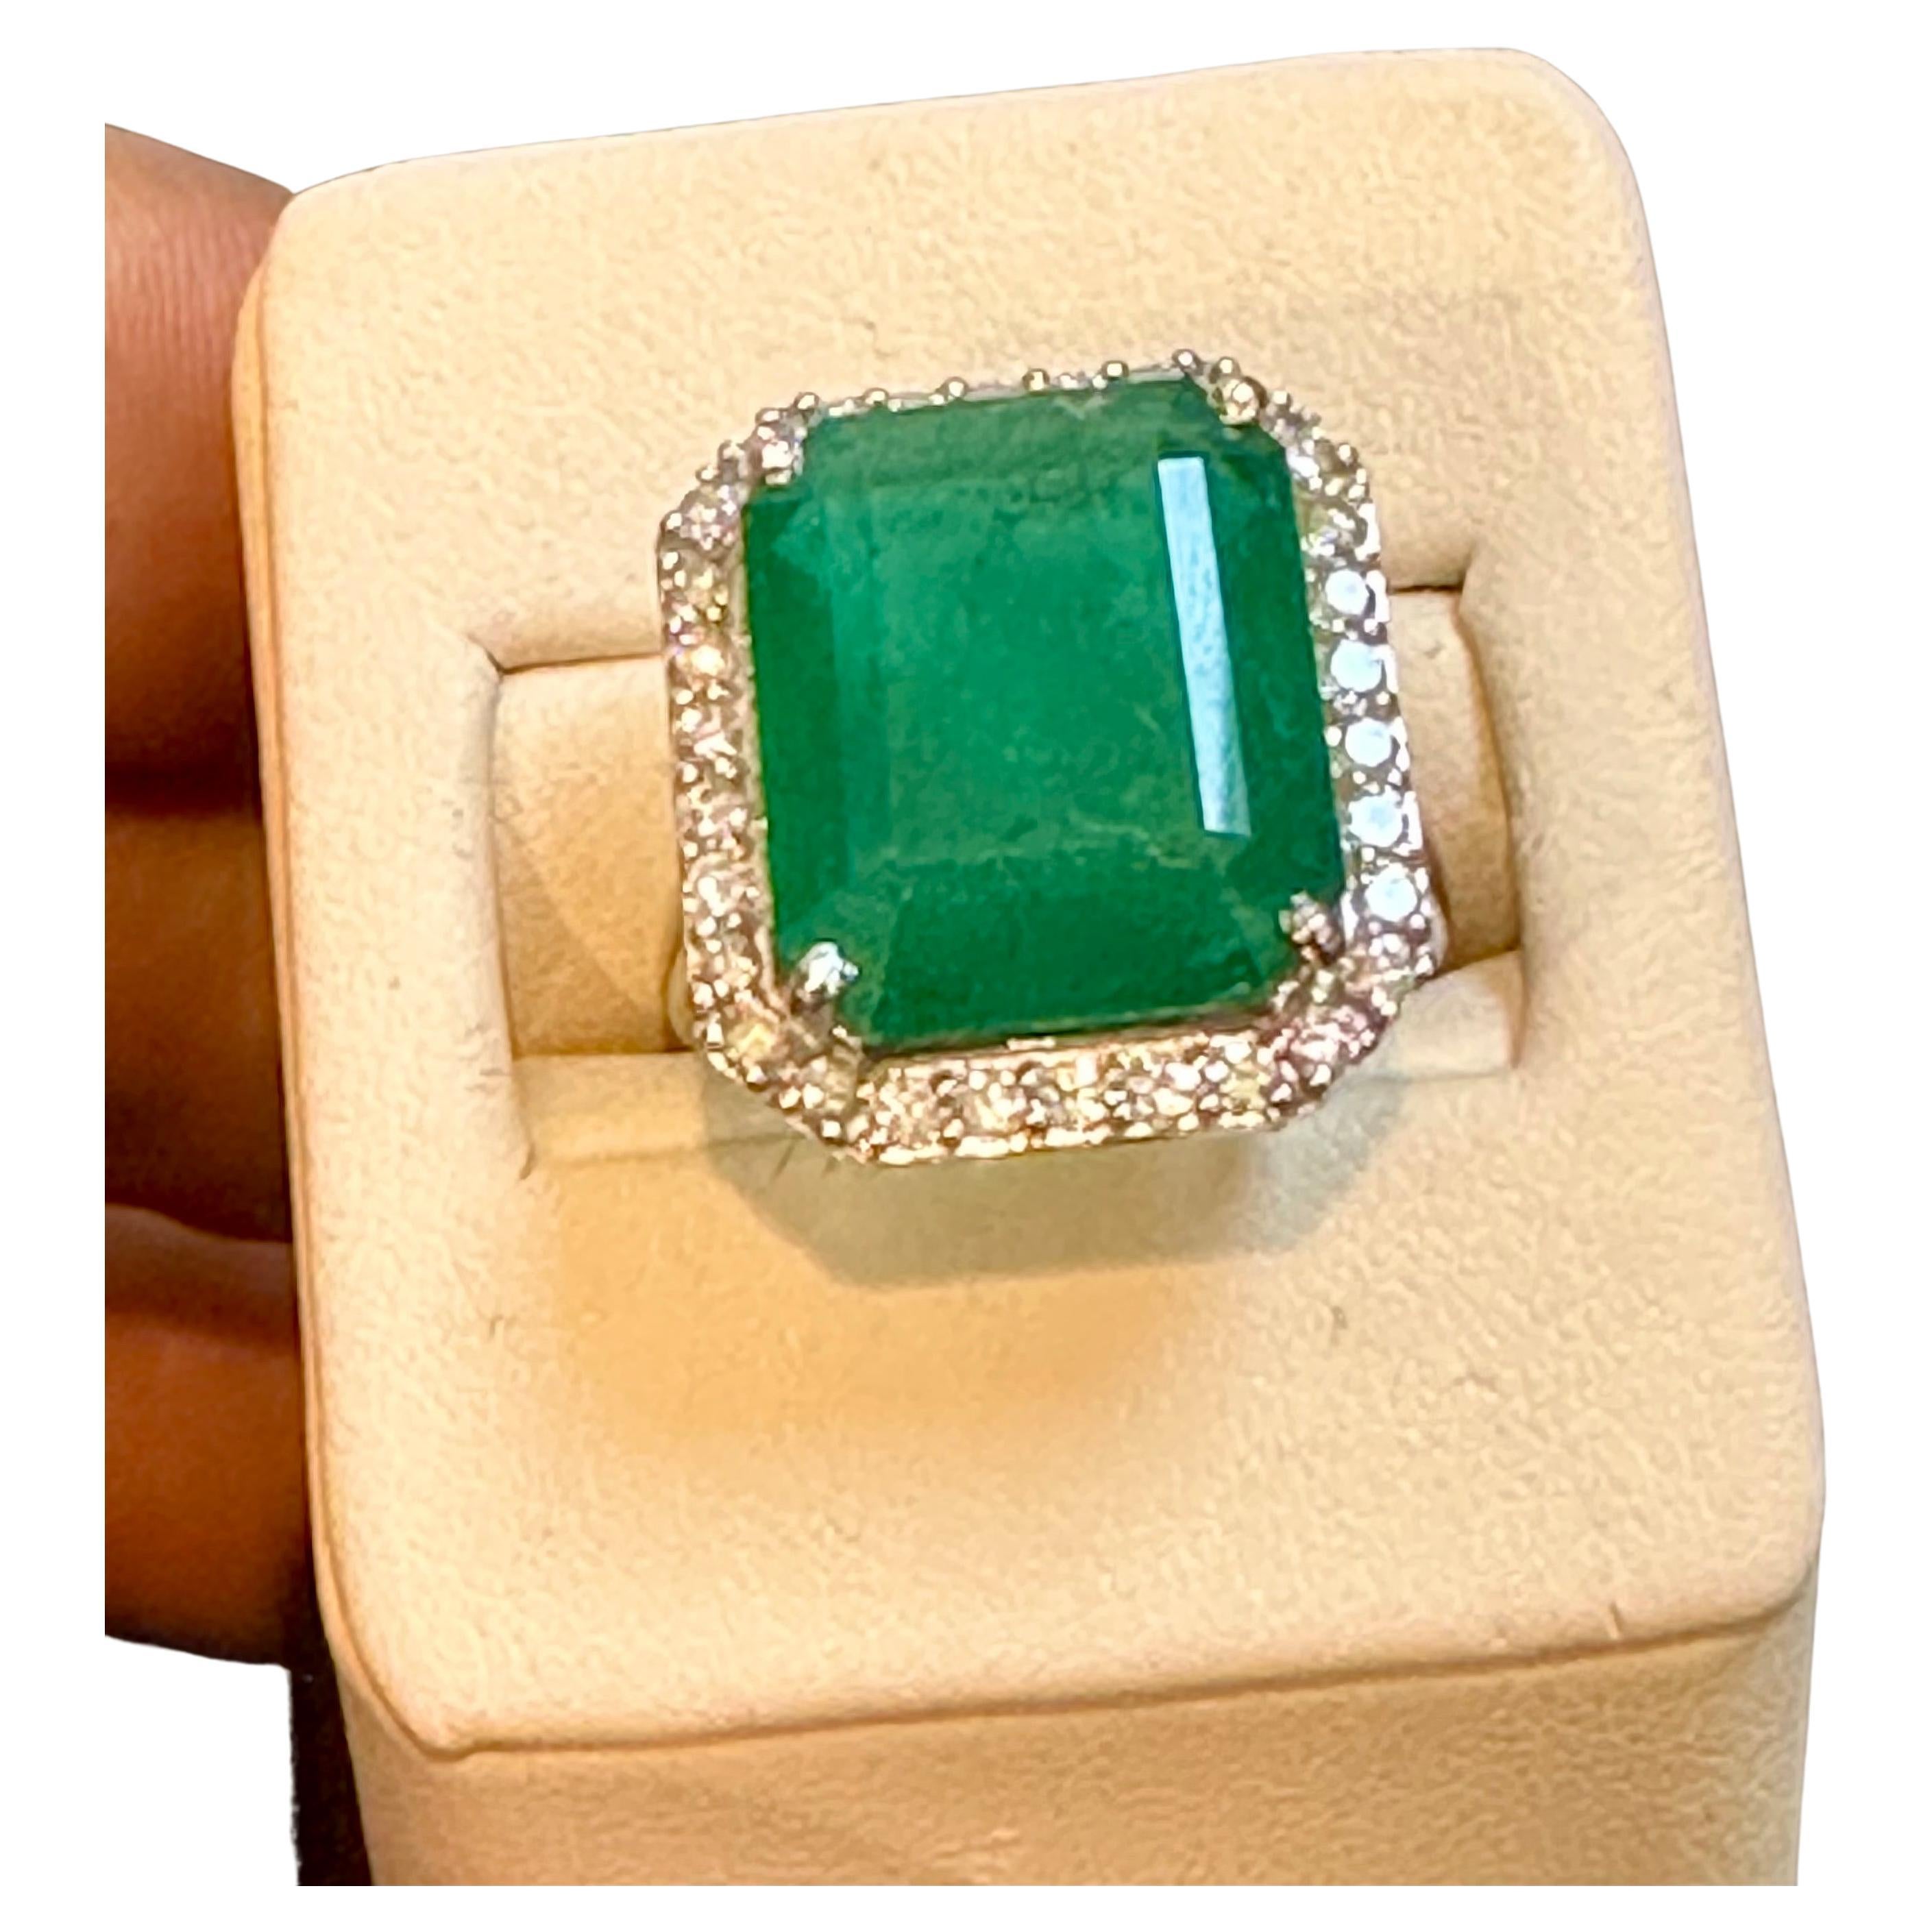 Natural 13 Carat Emerald Cut Zambian Emerald & Diamond Ring in 14Kt  White Gold
A classic design  ring , Ring Size 6.75
Exact 13 Carat  Emerald Cut Emerald Absolutely gorgeous emerald , Very desirable color .
Origin Zambia
14 Karat white gold  7.6